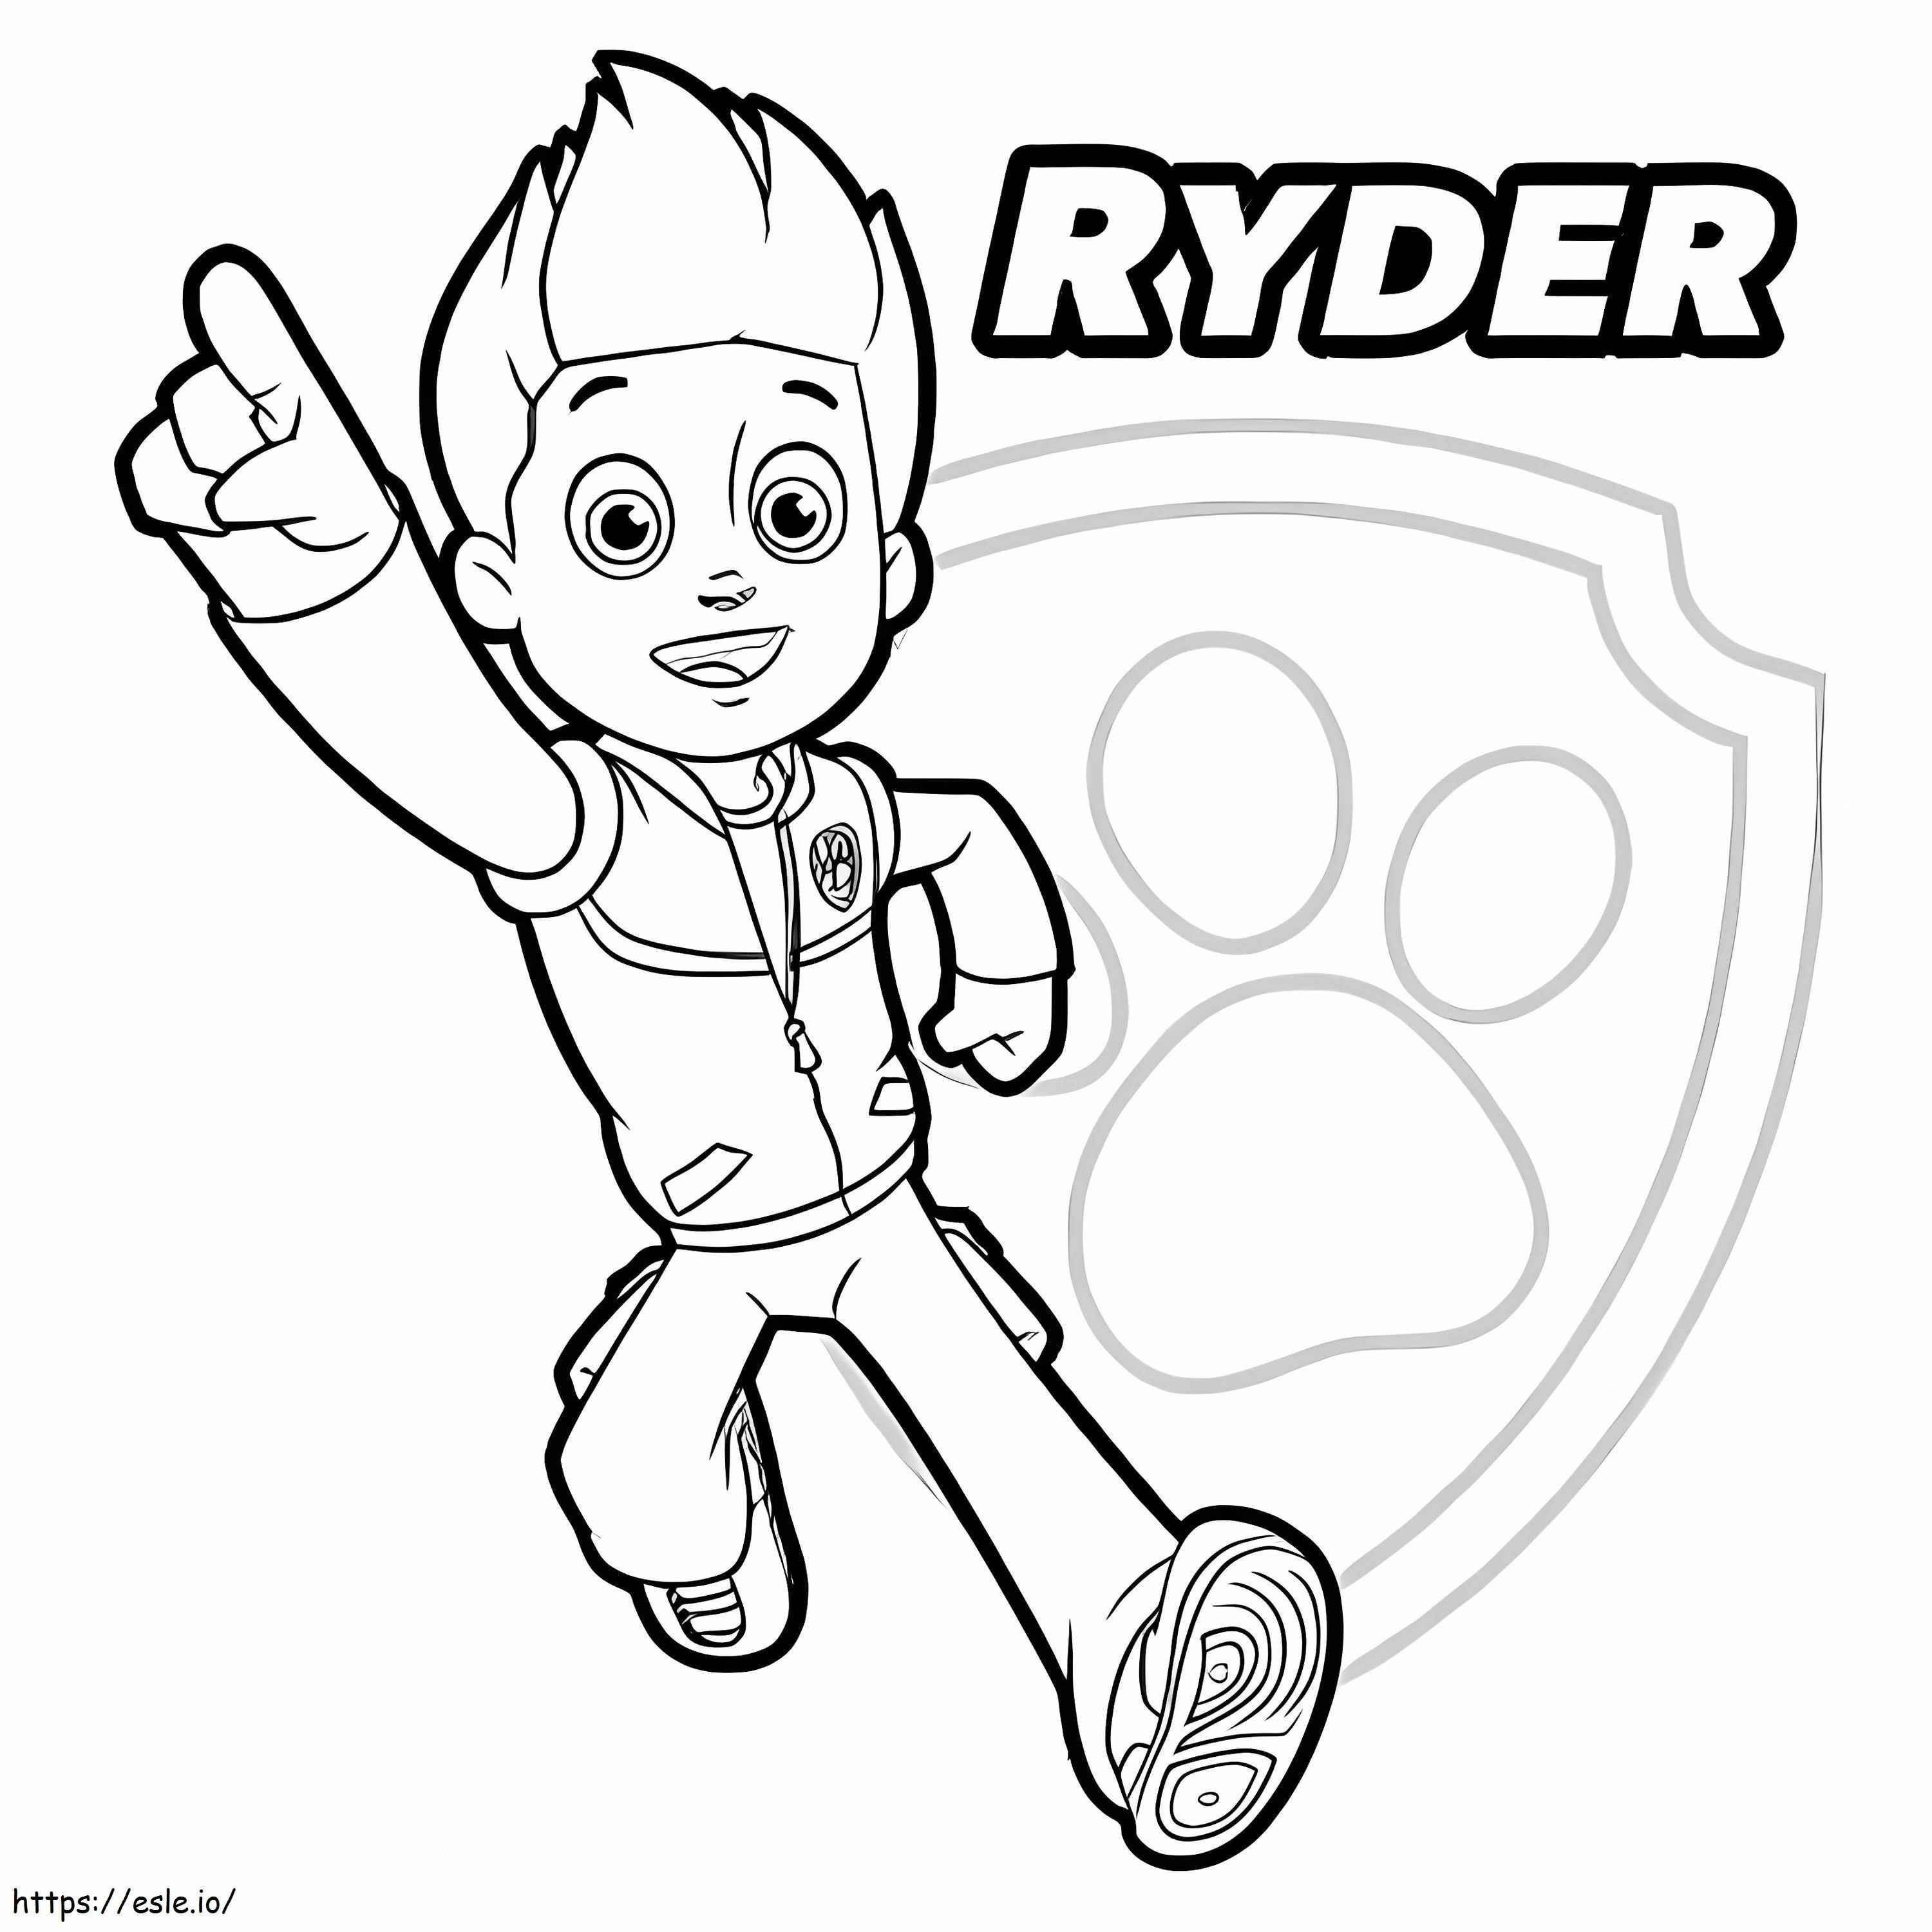 Distintivo Ryder e Pawprint para colorir